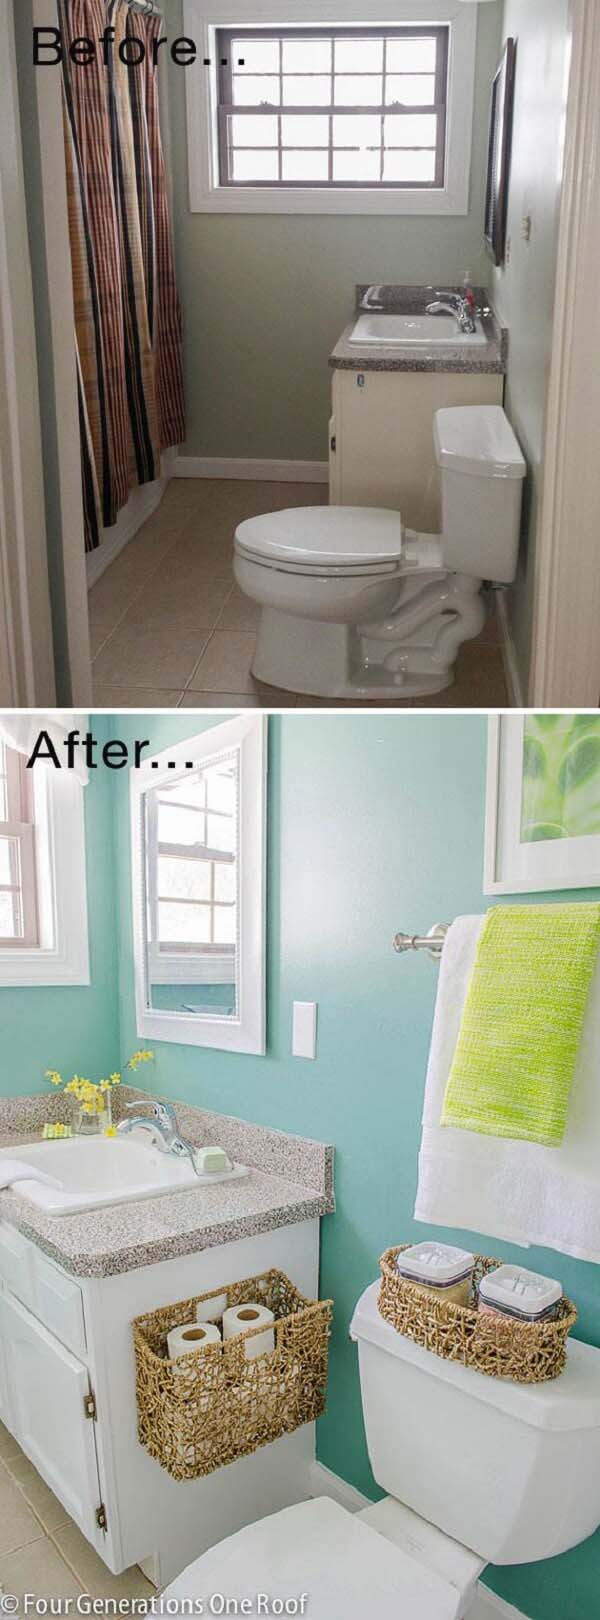 For Small Windows, Keep Colors Light #bathroom #makeover #decorhomeideas